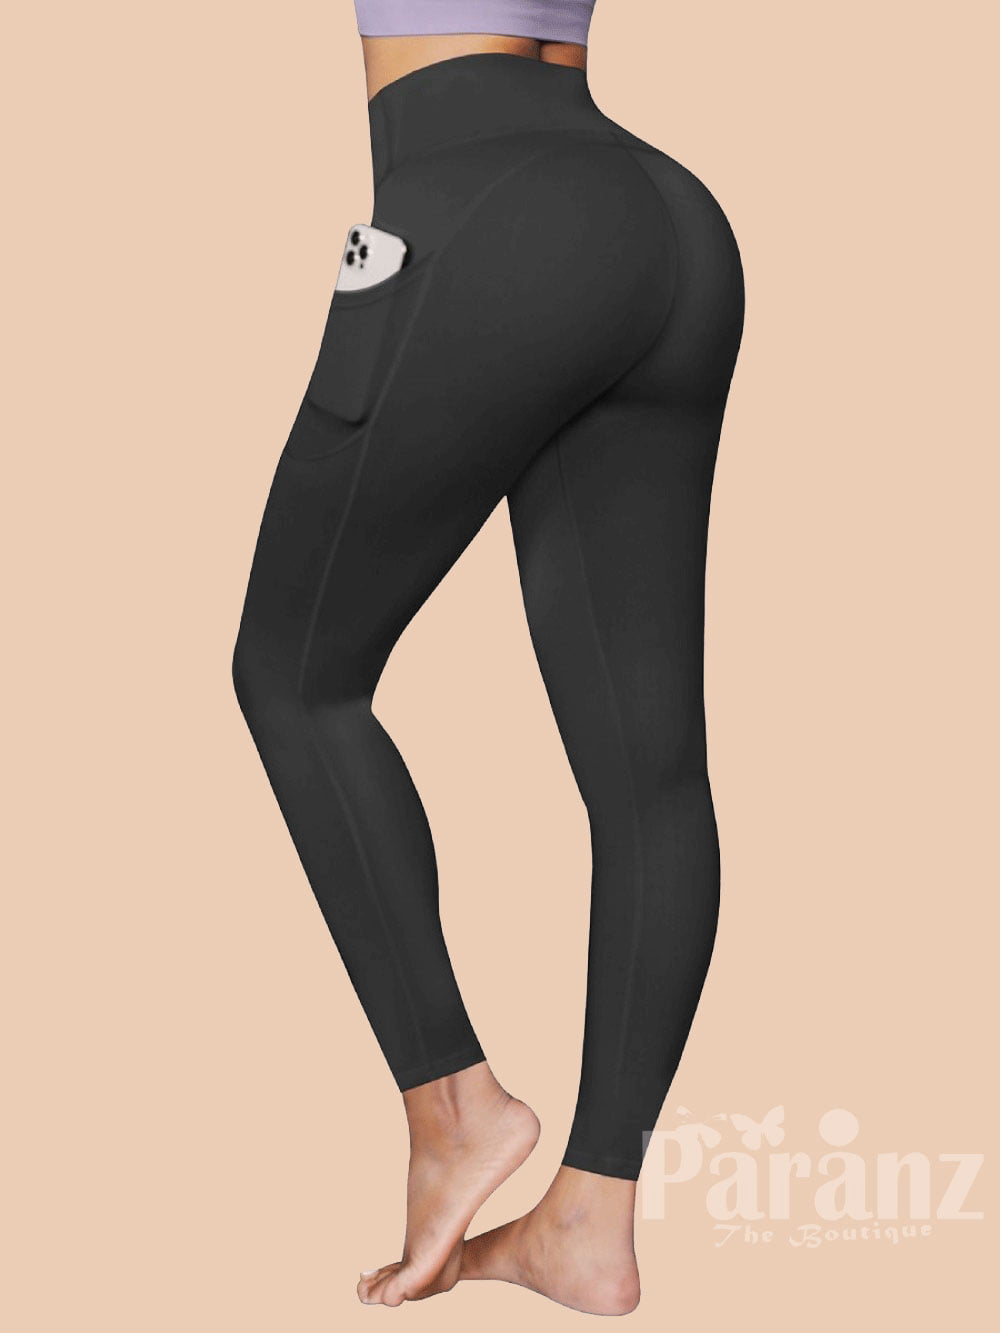 Black Yoga Leggings High Waist Butt Lifter With Pocket Sport Series